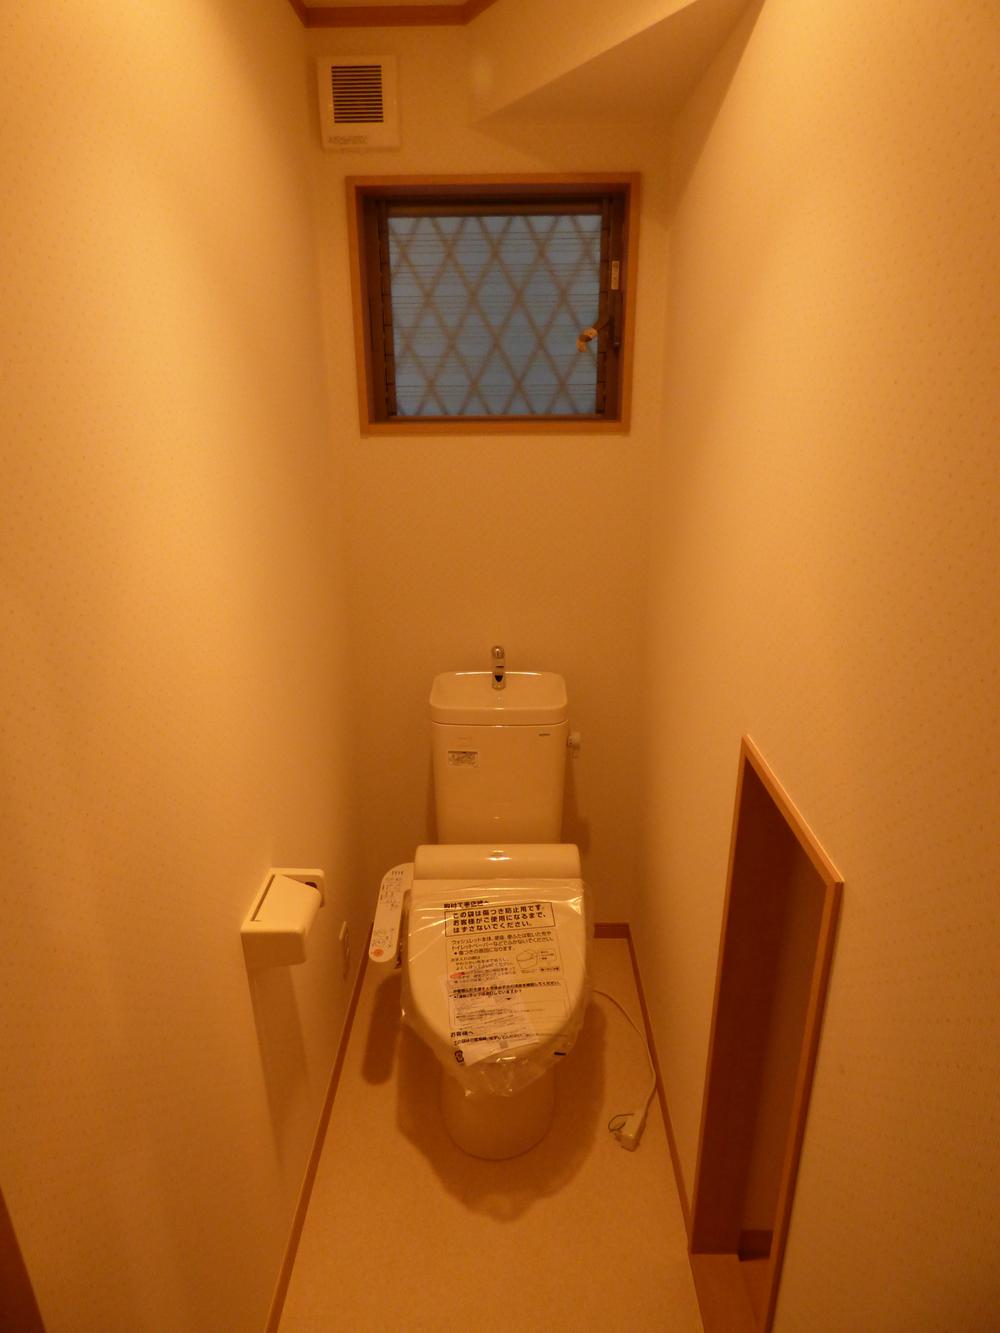 Toilet.  [First floor toilet] (December 2013) Shooting